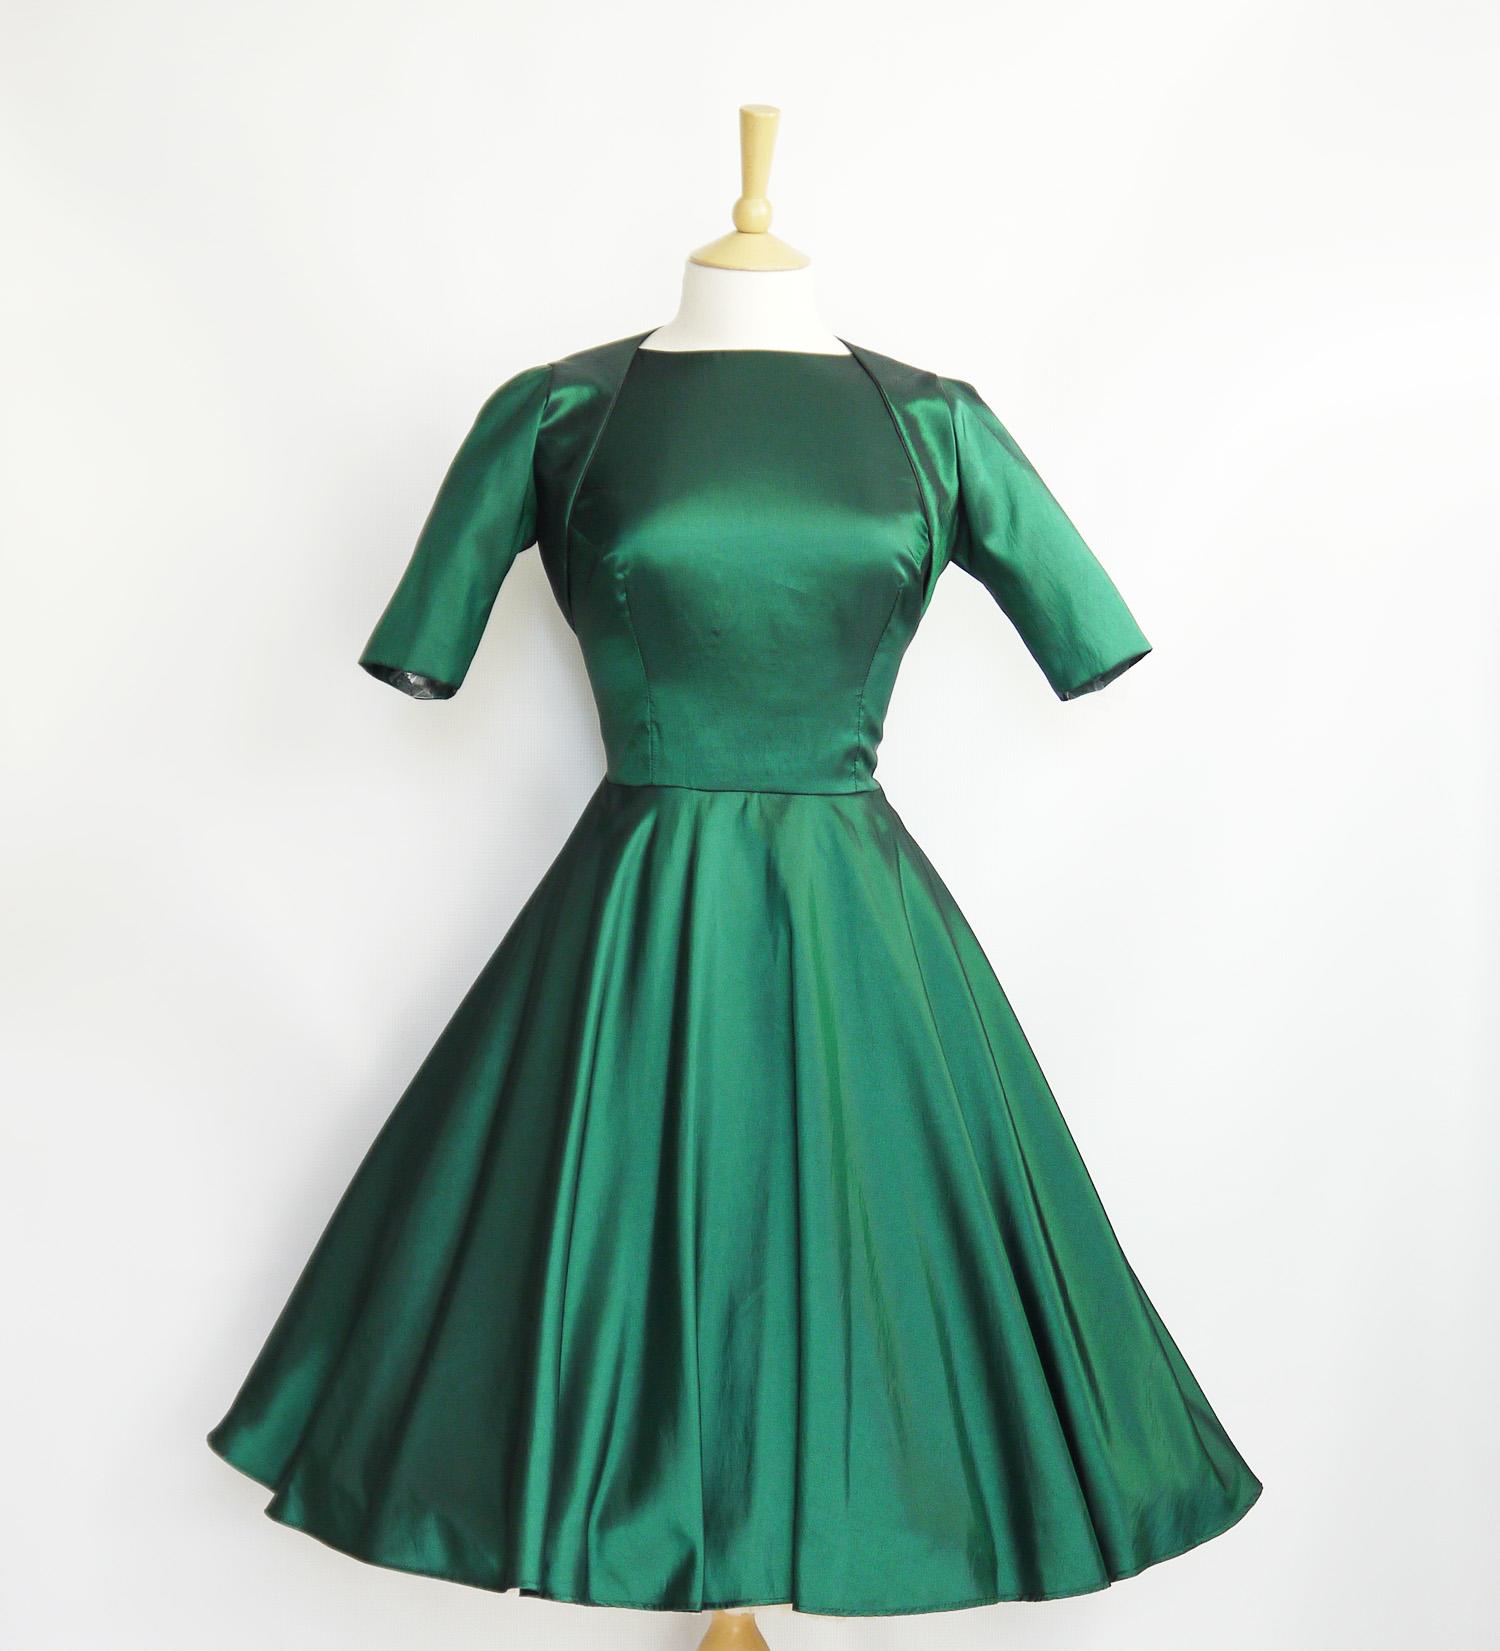 Size UK 16 - Emerald Green Taffeta Sabrina Swing Dress